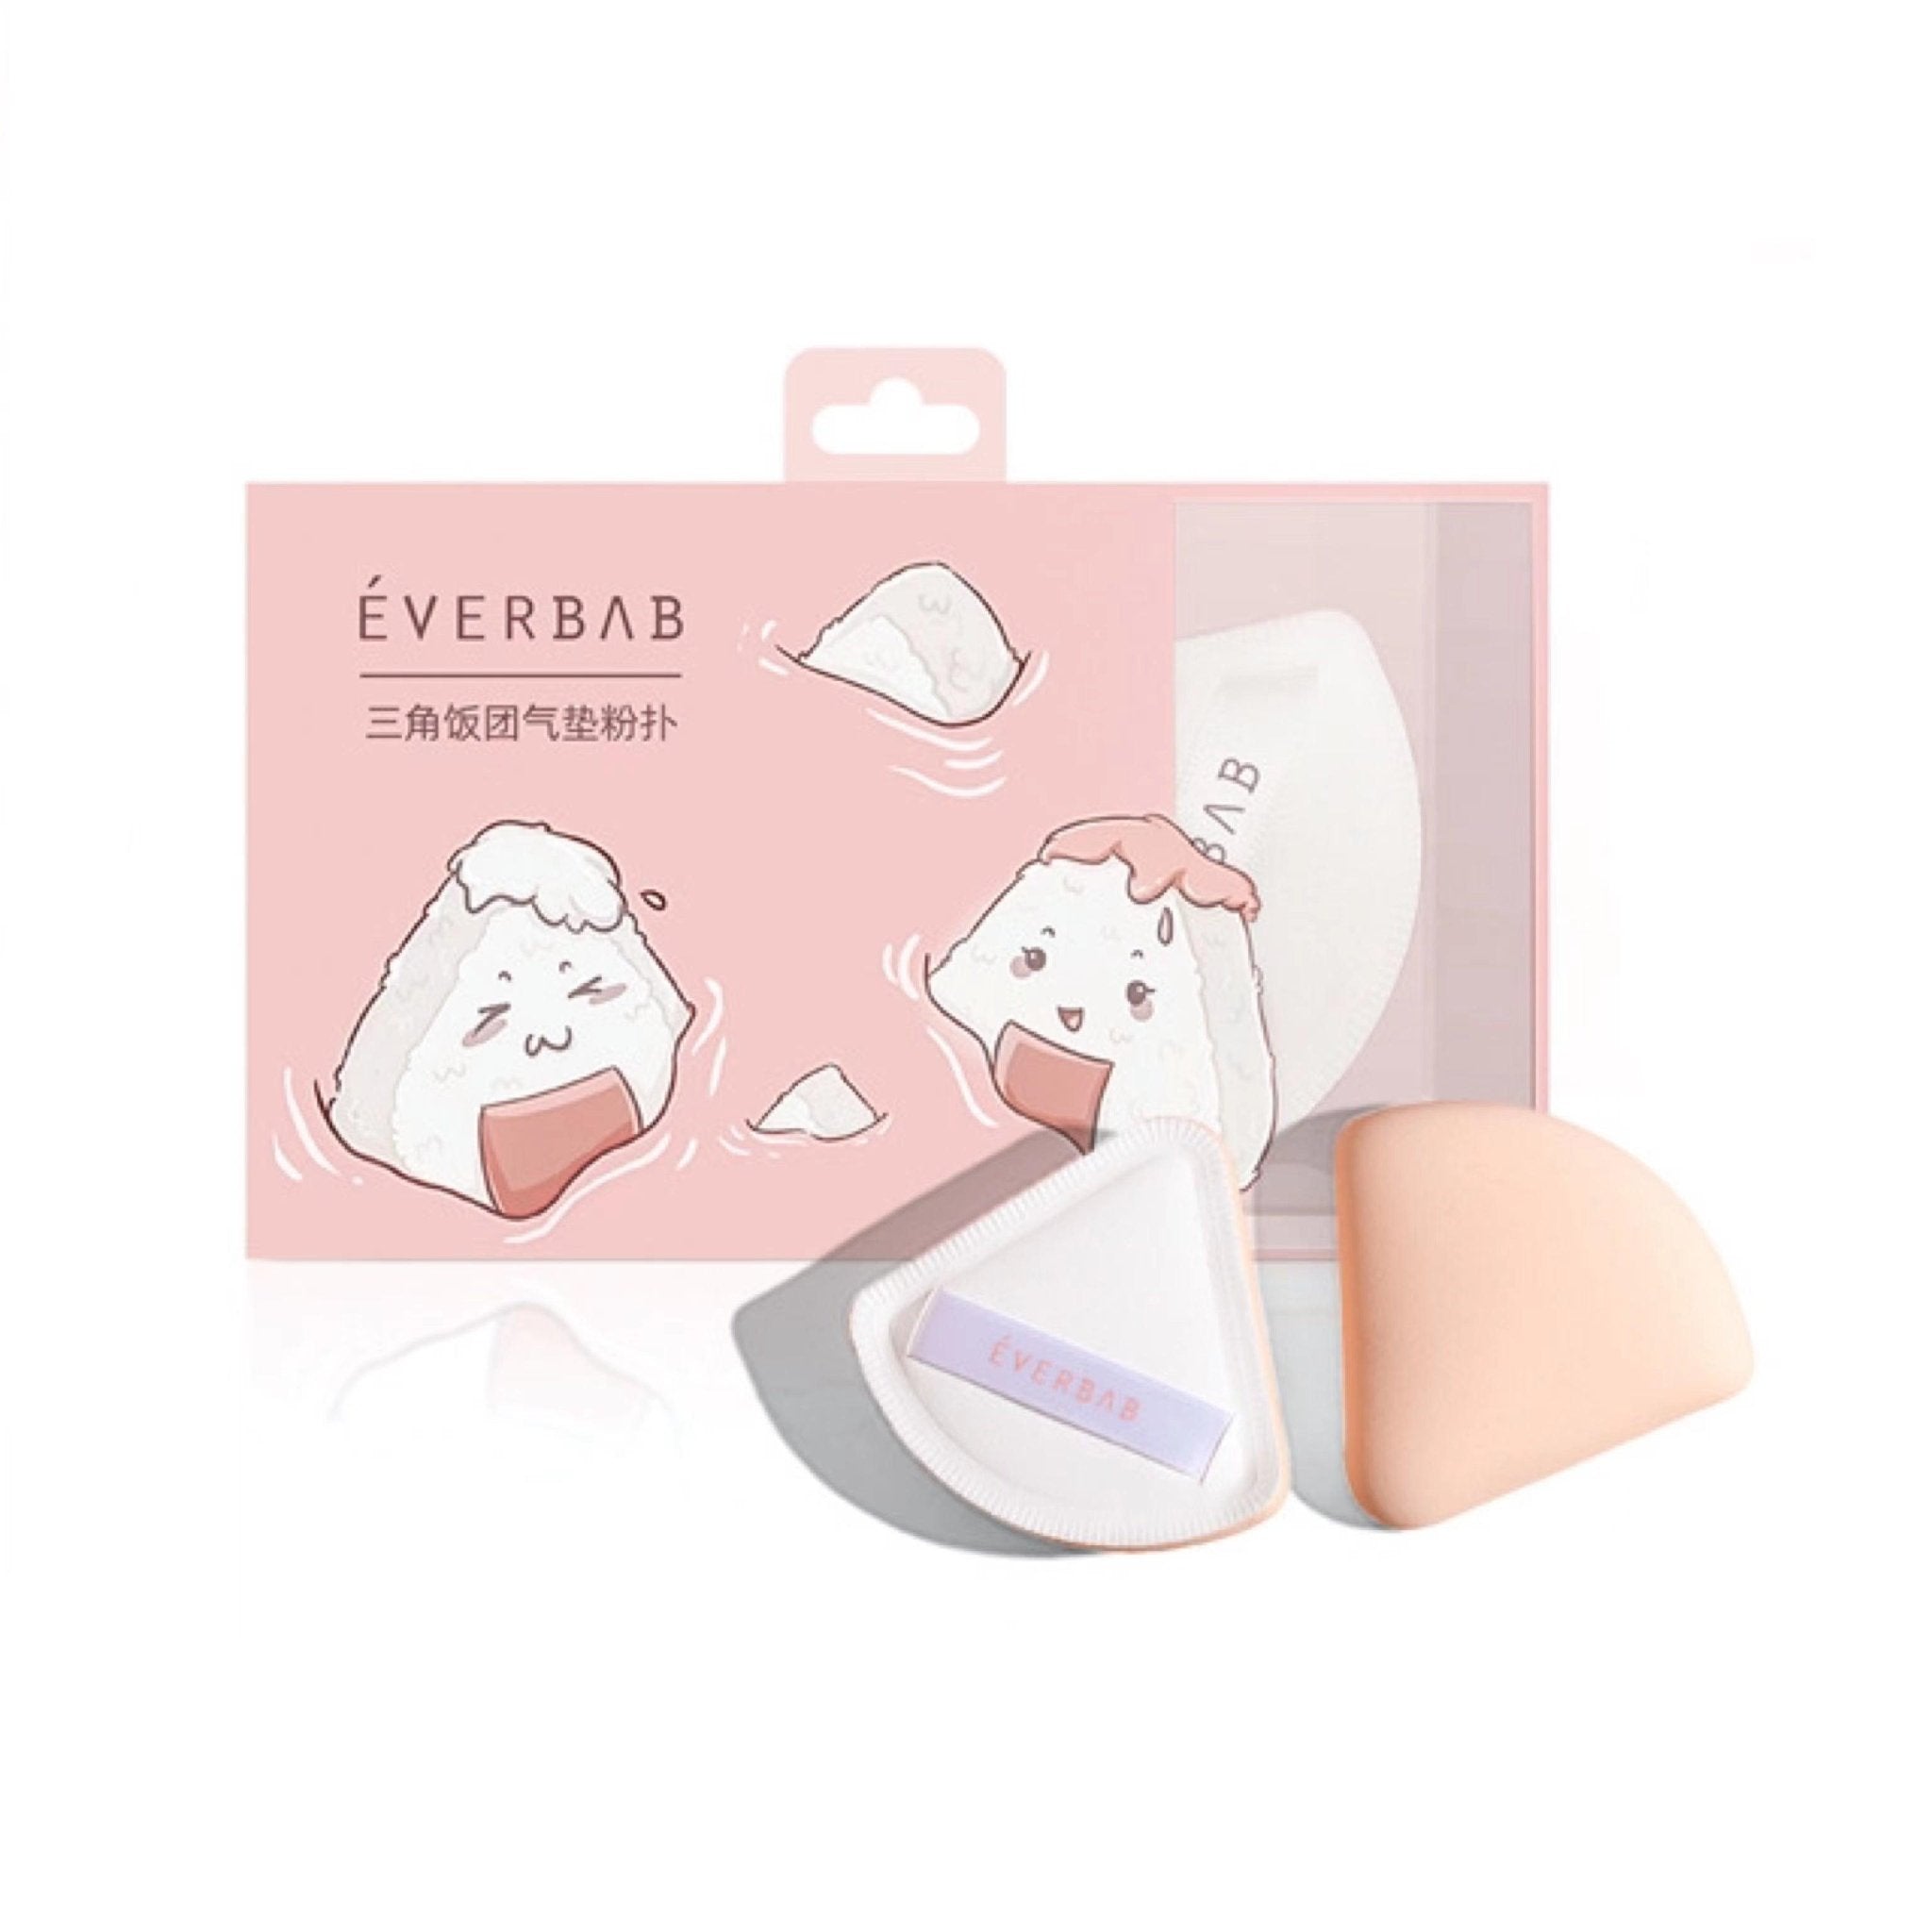 Everbab Makeup Sponge EB002 - Chic Decent